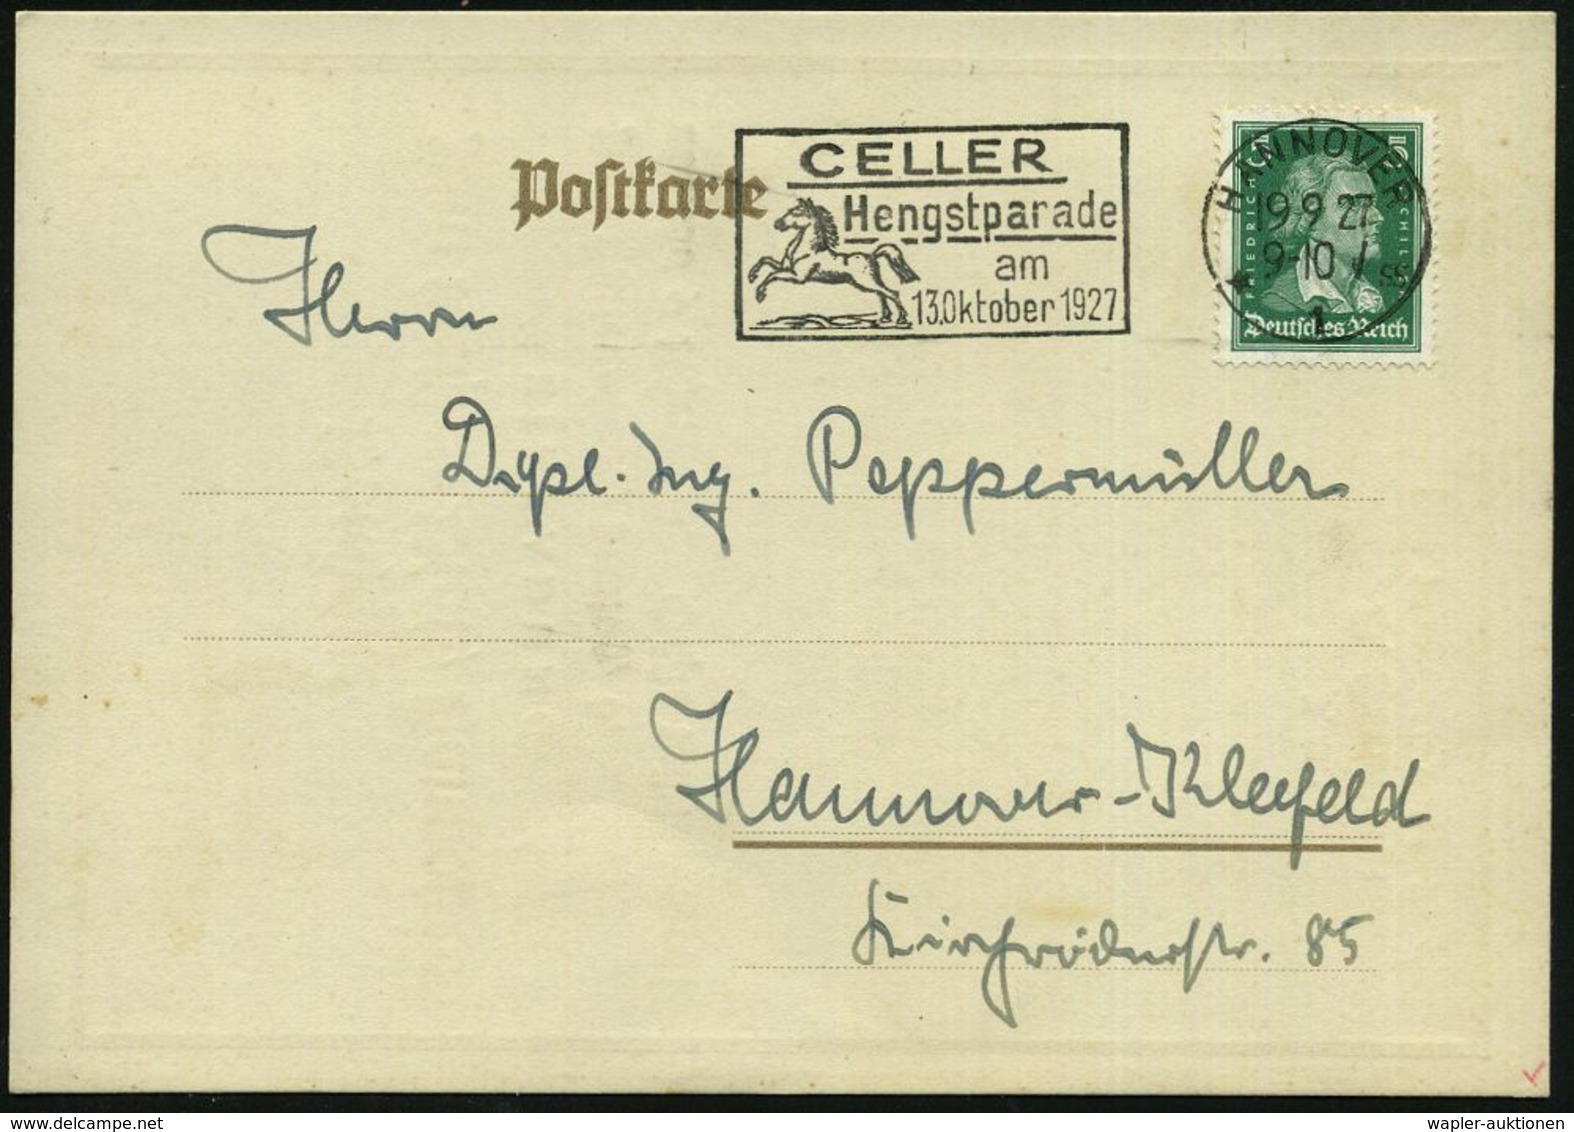 Hannover 1 1927 (19.9.) Dekorative Einladungs-Kt.: "Bauhütte Zum Weißen Blatt.." (Hüttenabend) Seltene Ortskt. (Bo.15 A  - Franc-Maçonnerie